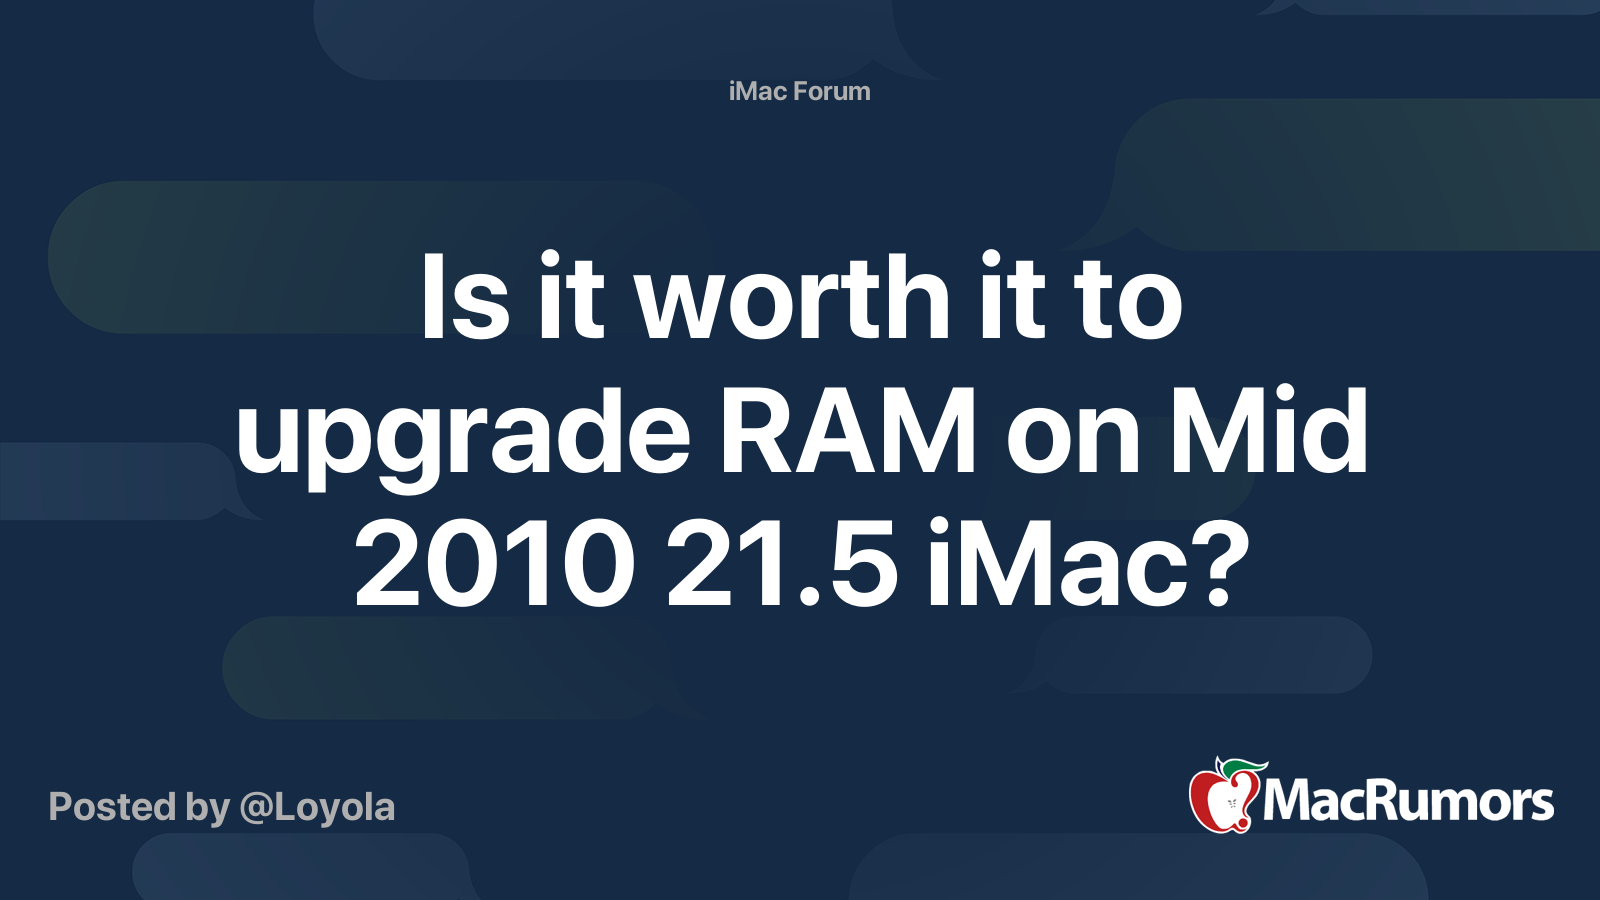 uudgrundelig øjenbryn backup Is it worth it to upgrade RAM on Mid 2010 21.5 iMac? | MacRumors Forums